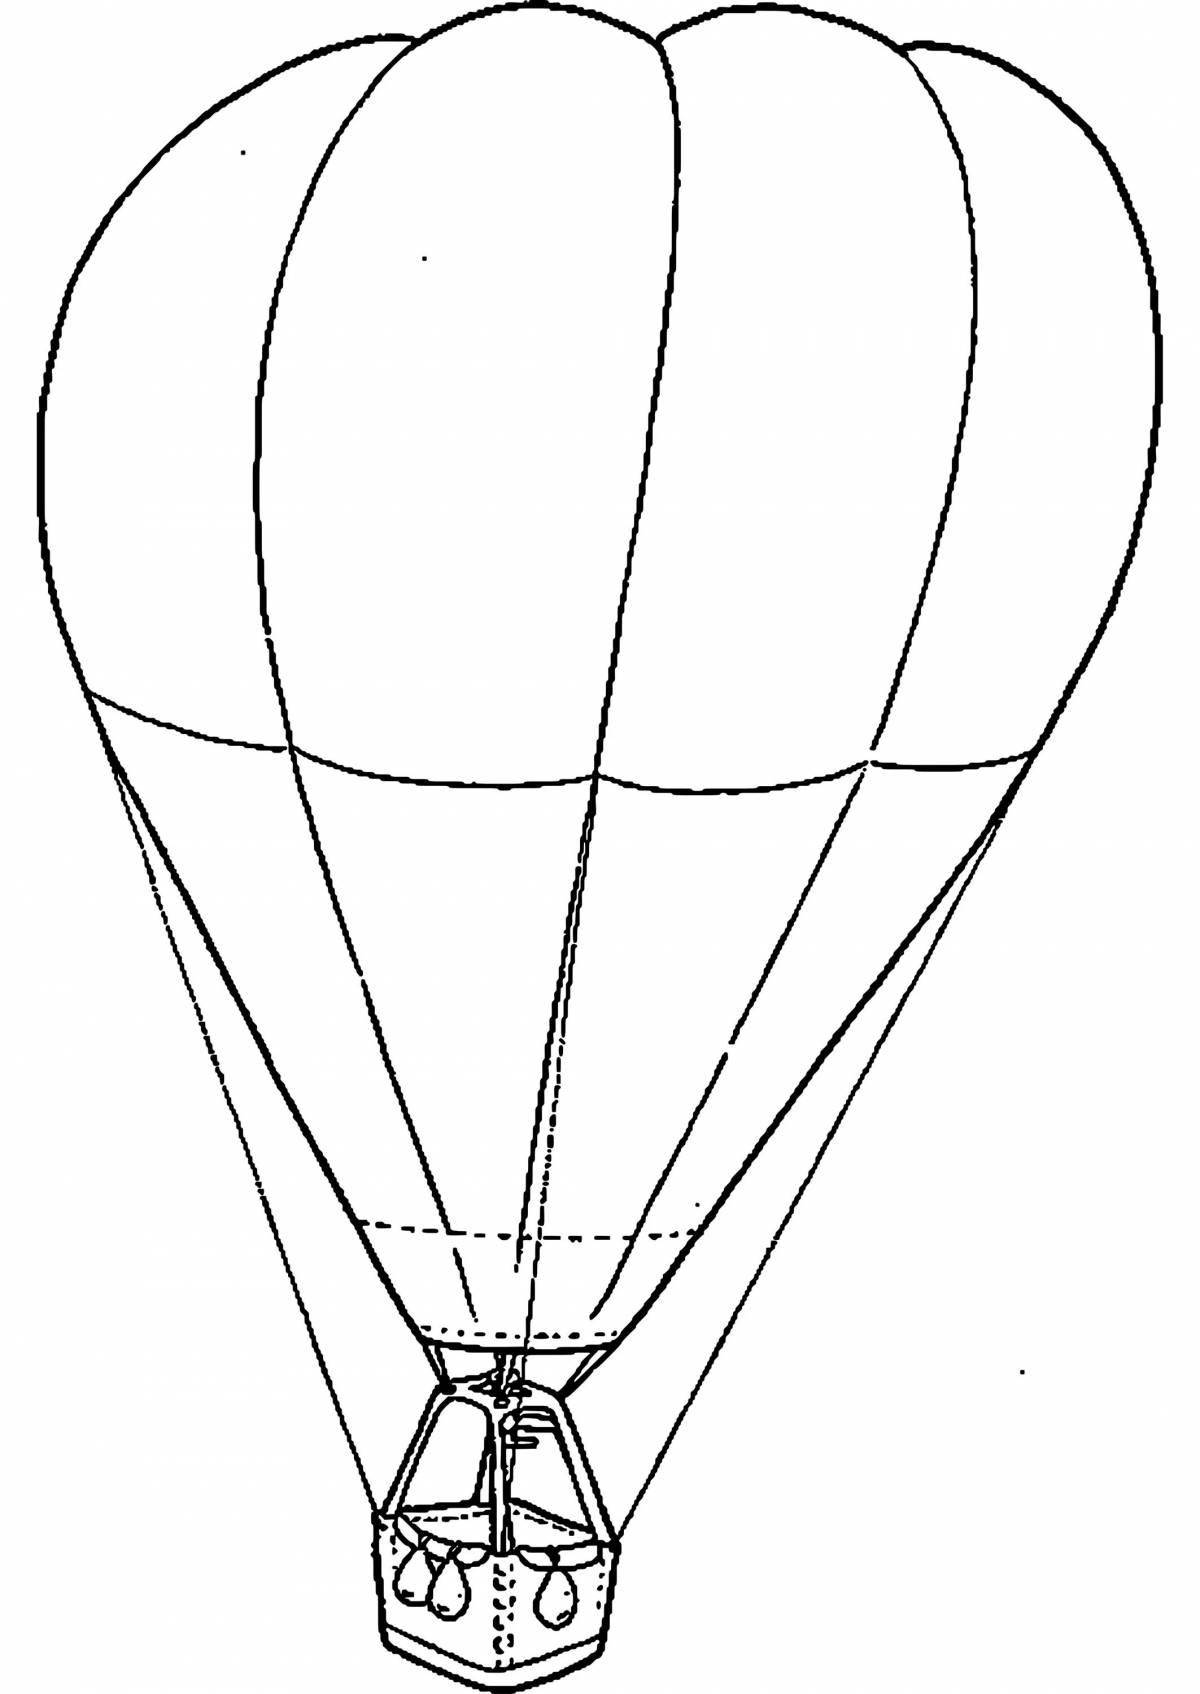 Tempting hot air balloon pattern